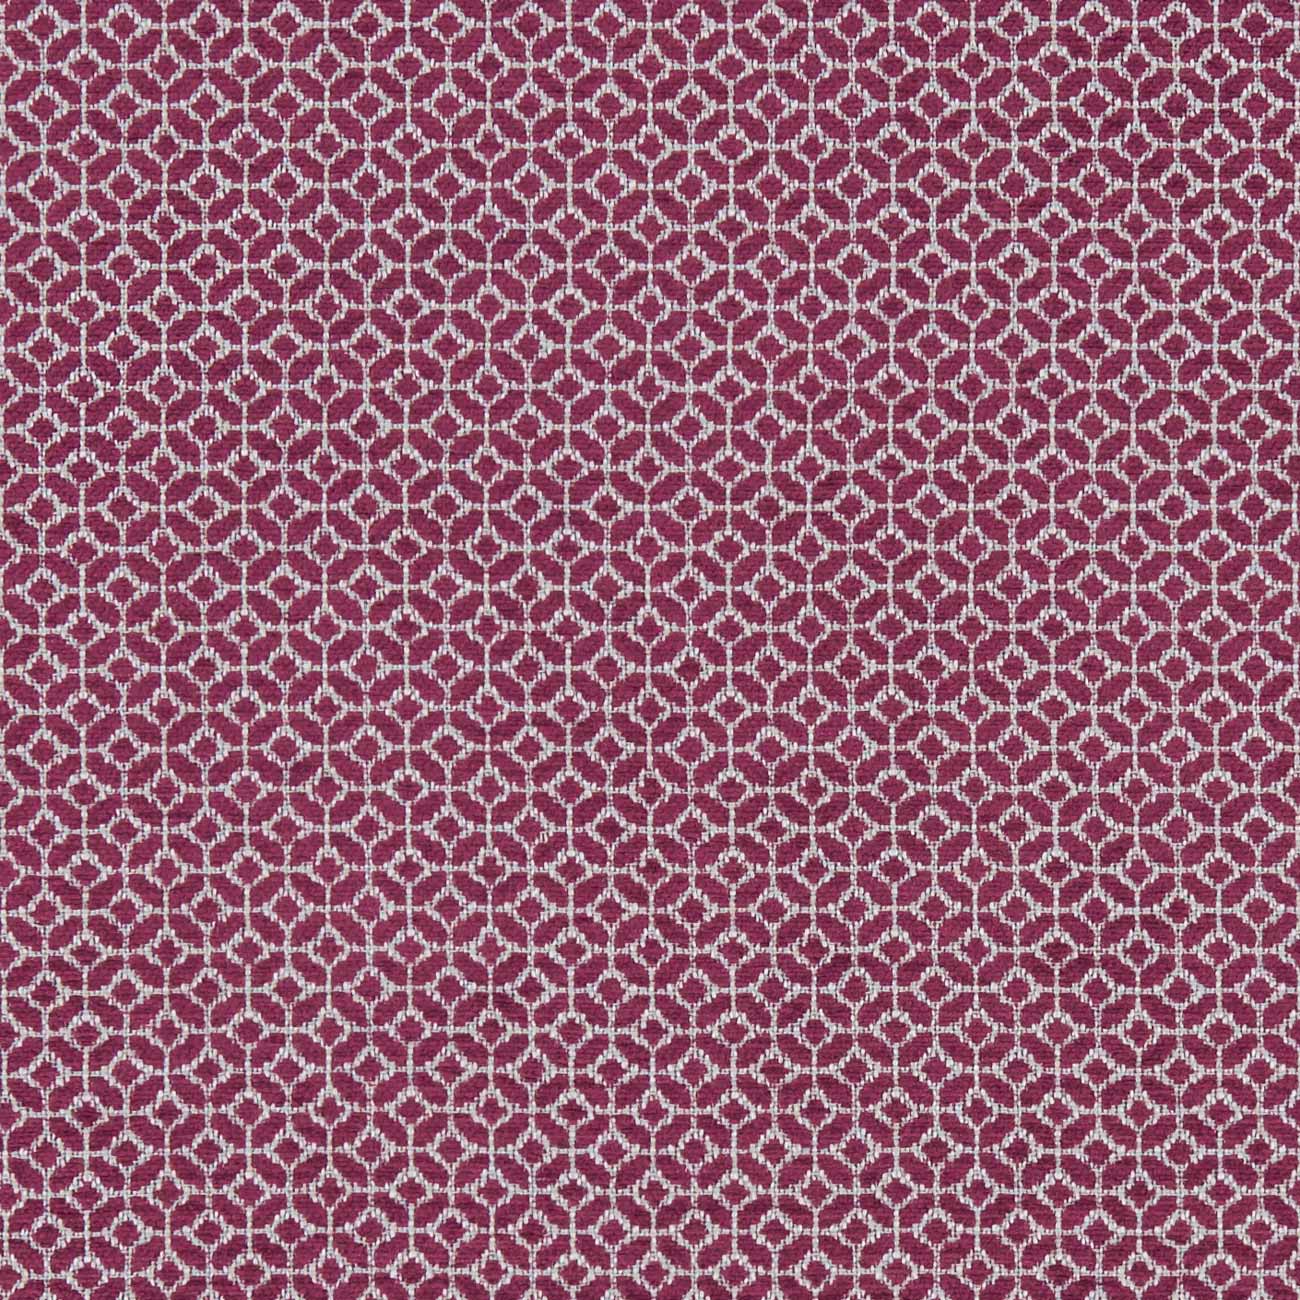 Orbit Raspberry Fabric by Clarke & Clarke